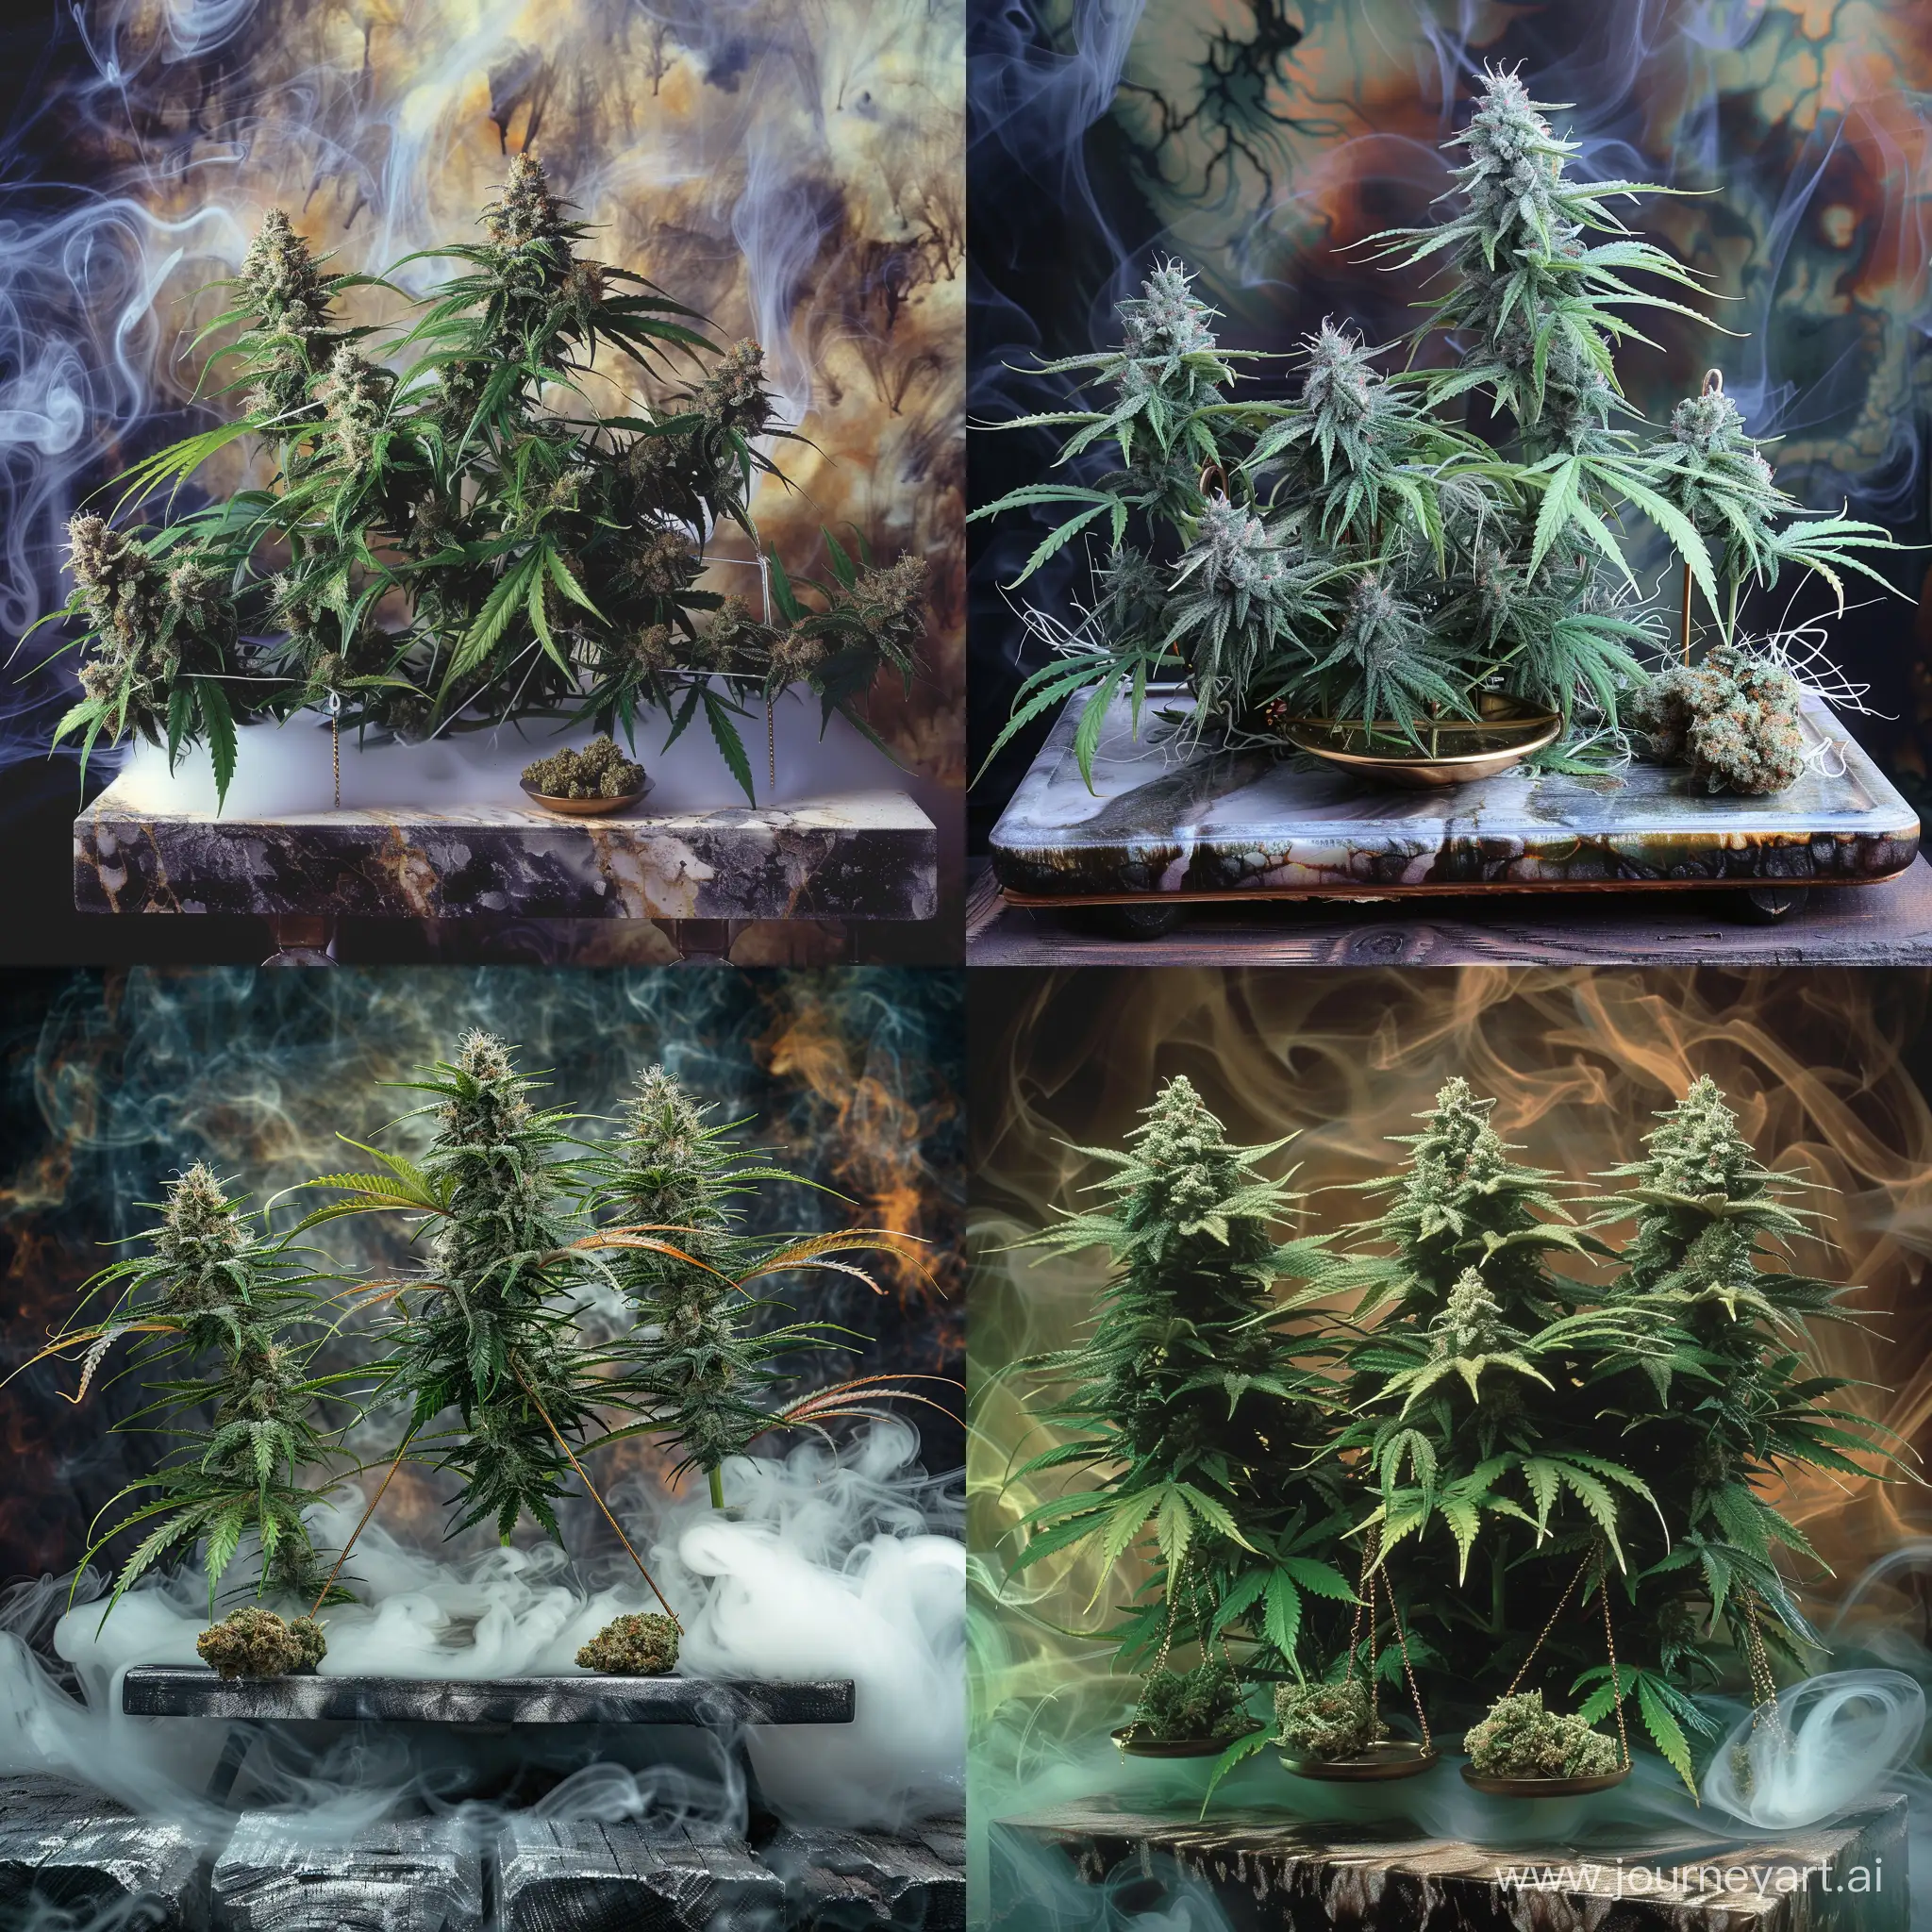 Realistic marijuana plants with marijuana bud on a scale with a smokey psychedelic background